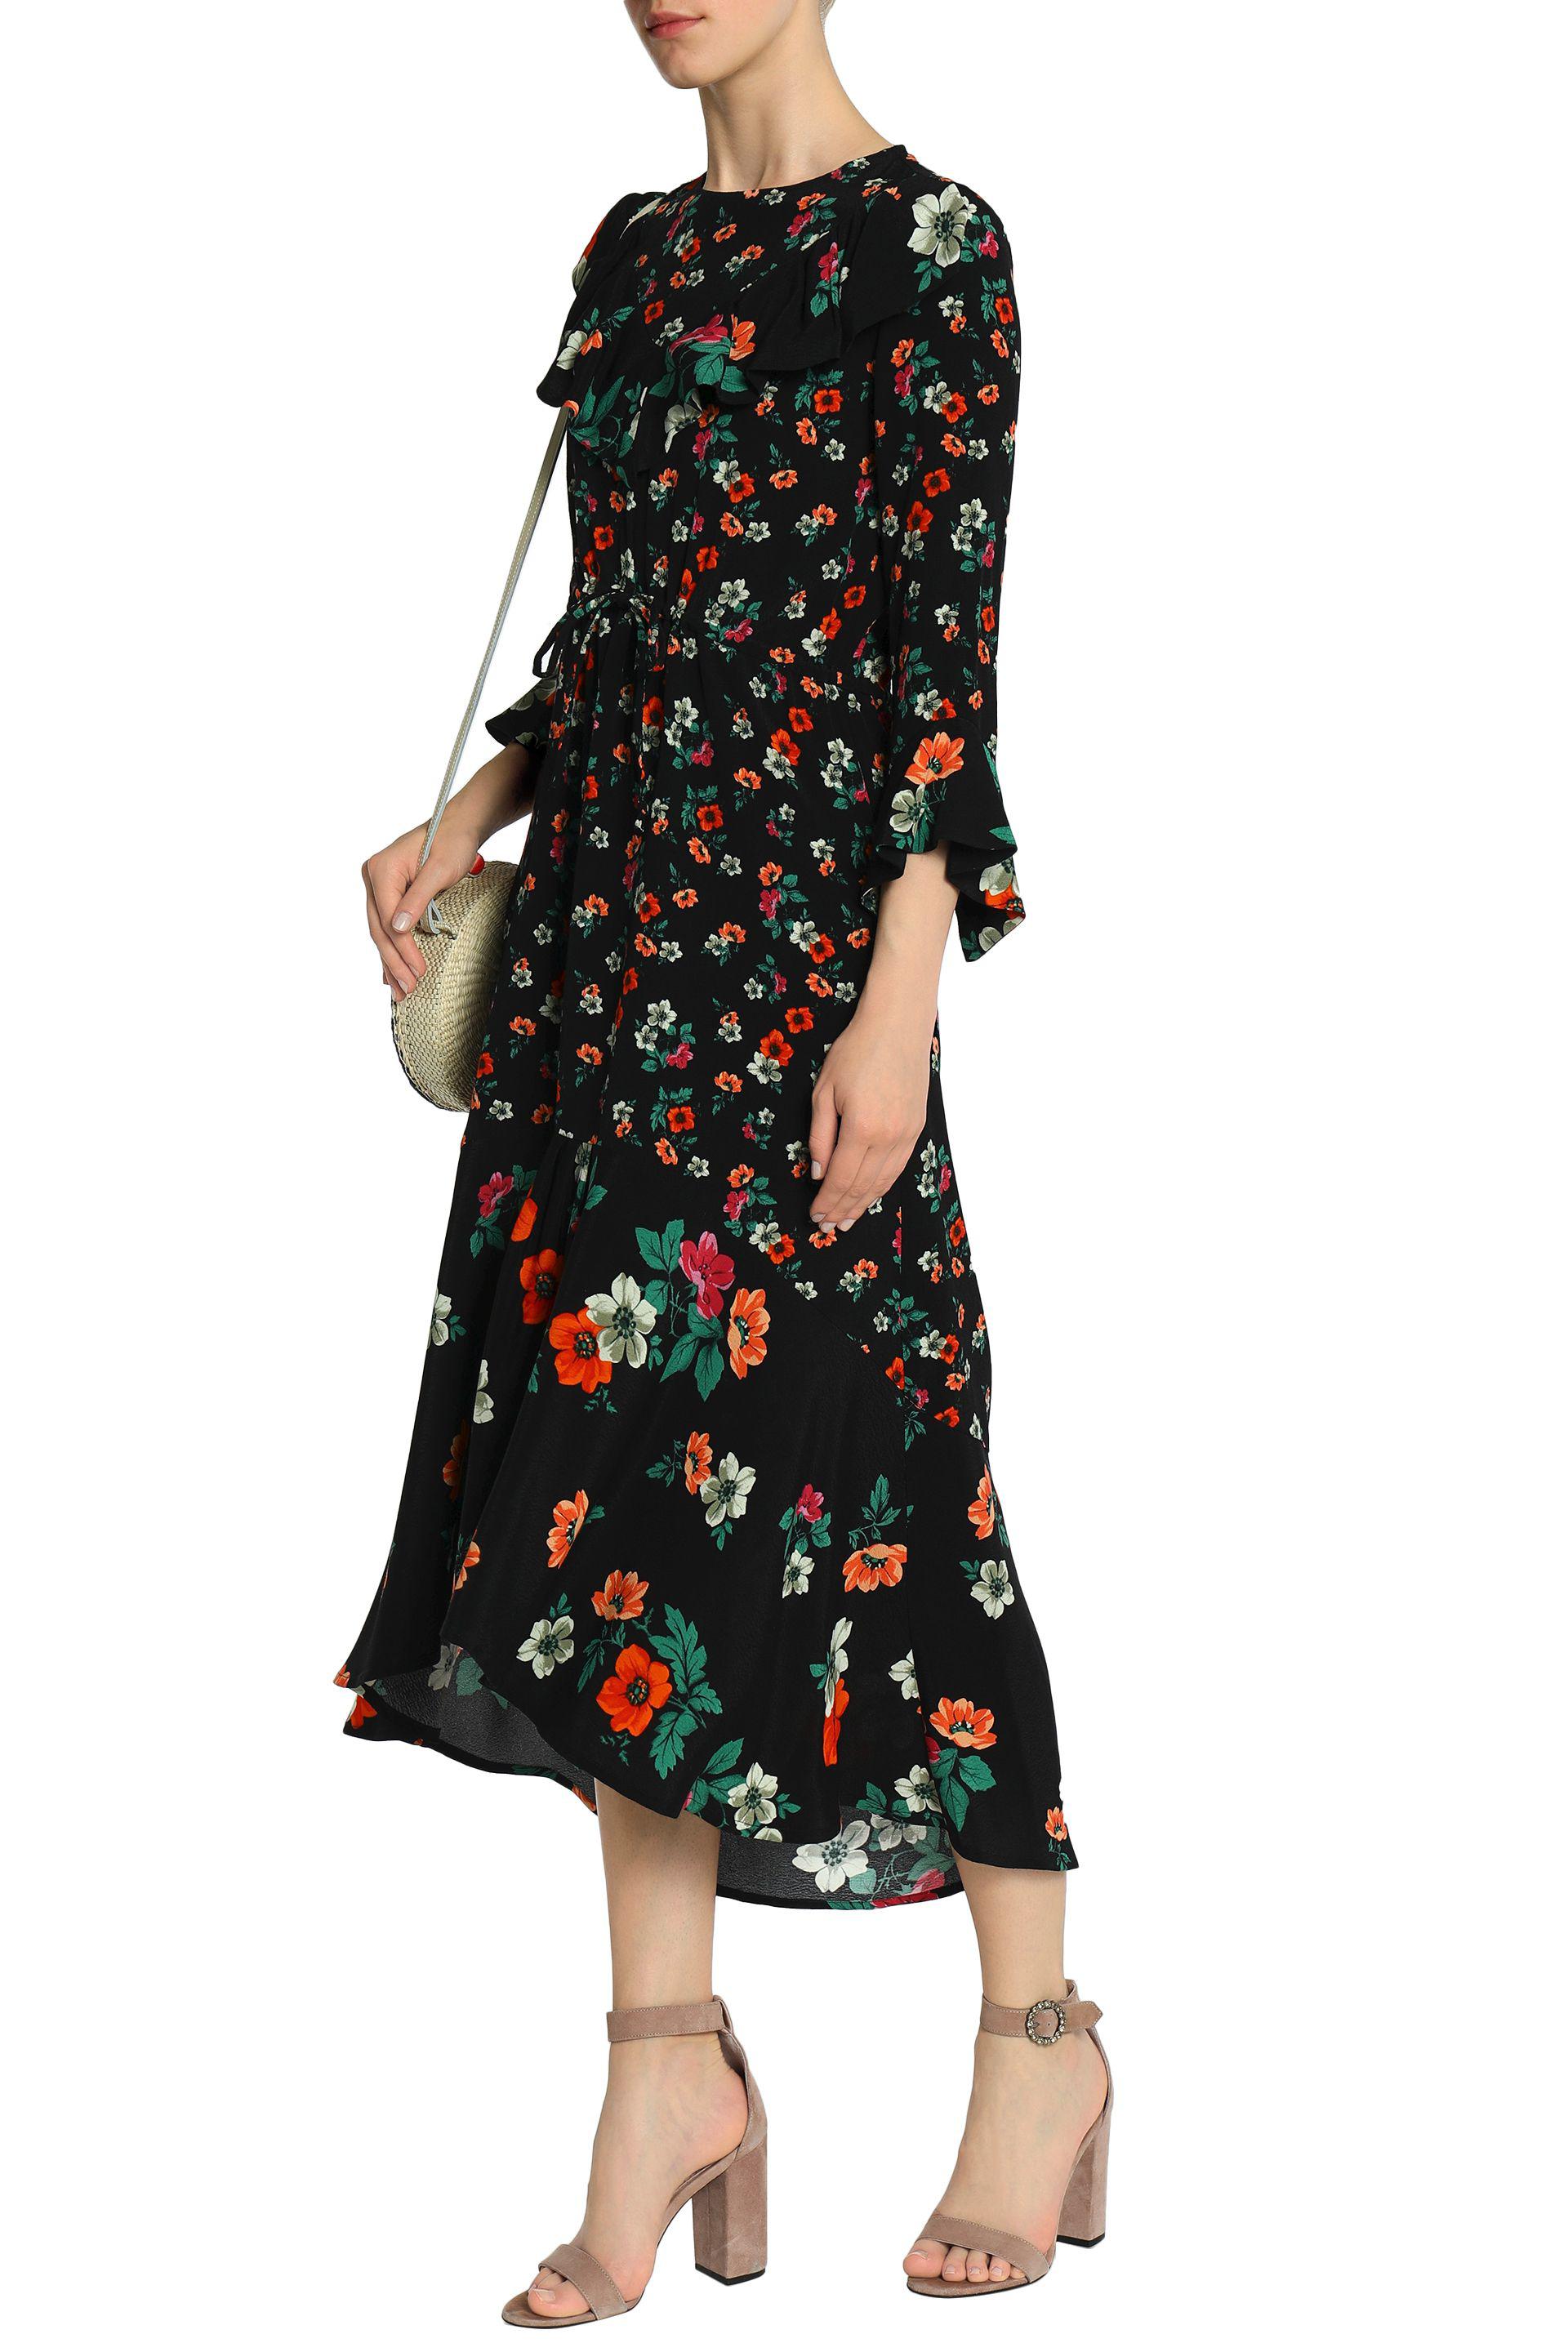 Maje Ruffle Floral-print Crepe Midi Dress in Black - Lyst